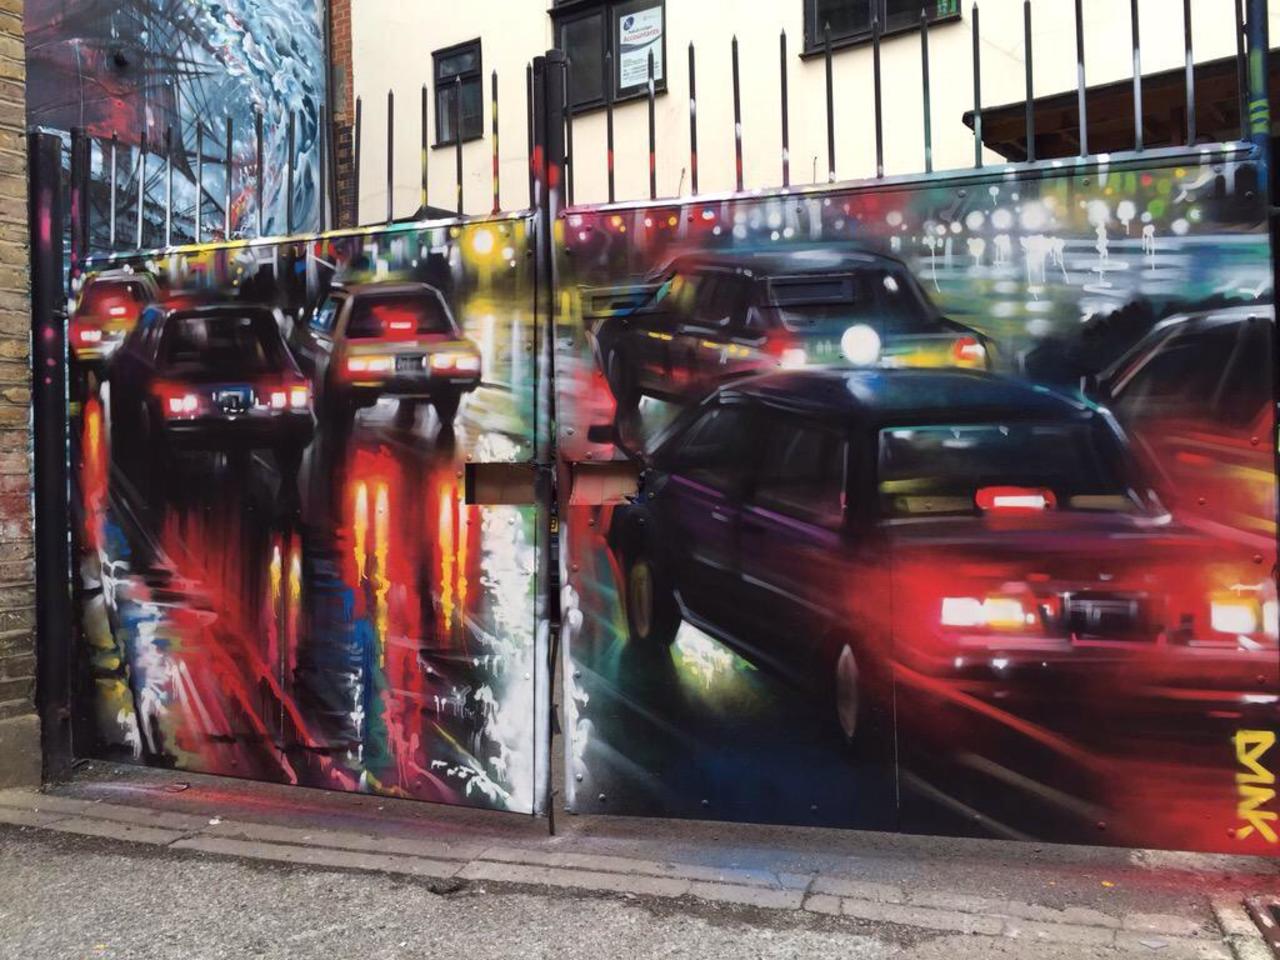 New Street Art by DanKitchener in Brick Lane London 

#art #graffiti #mural #streetart http://t.co/lB7yMMjFDi